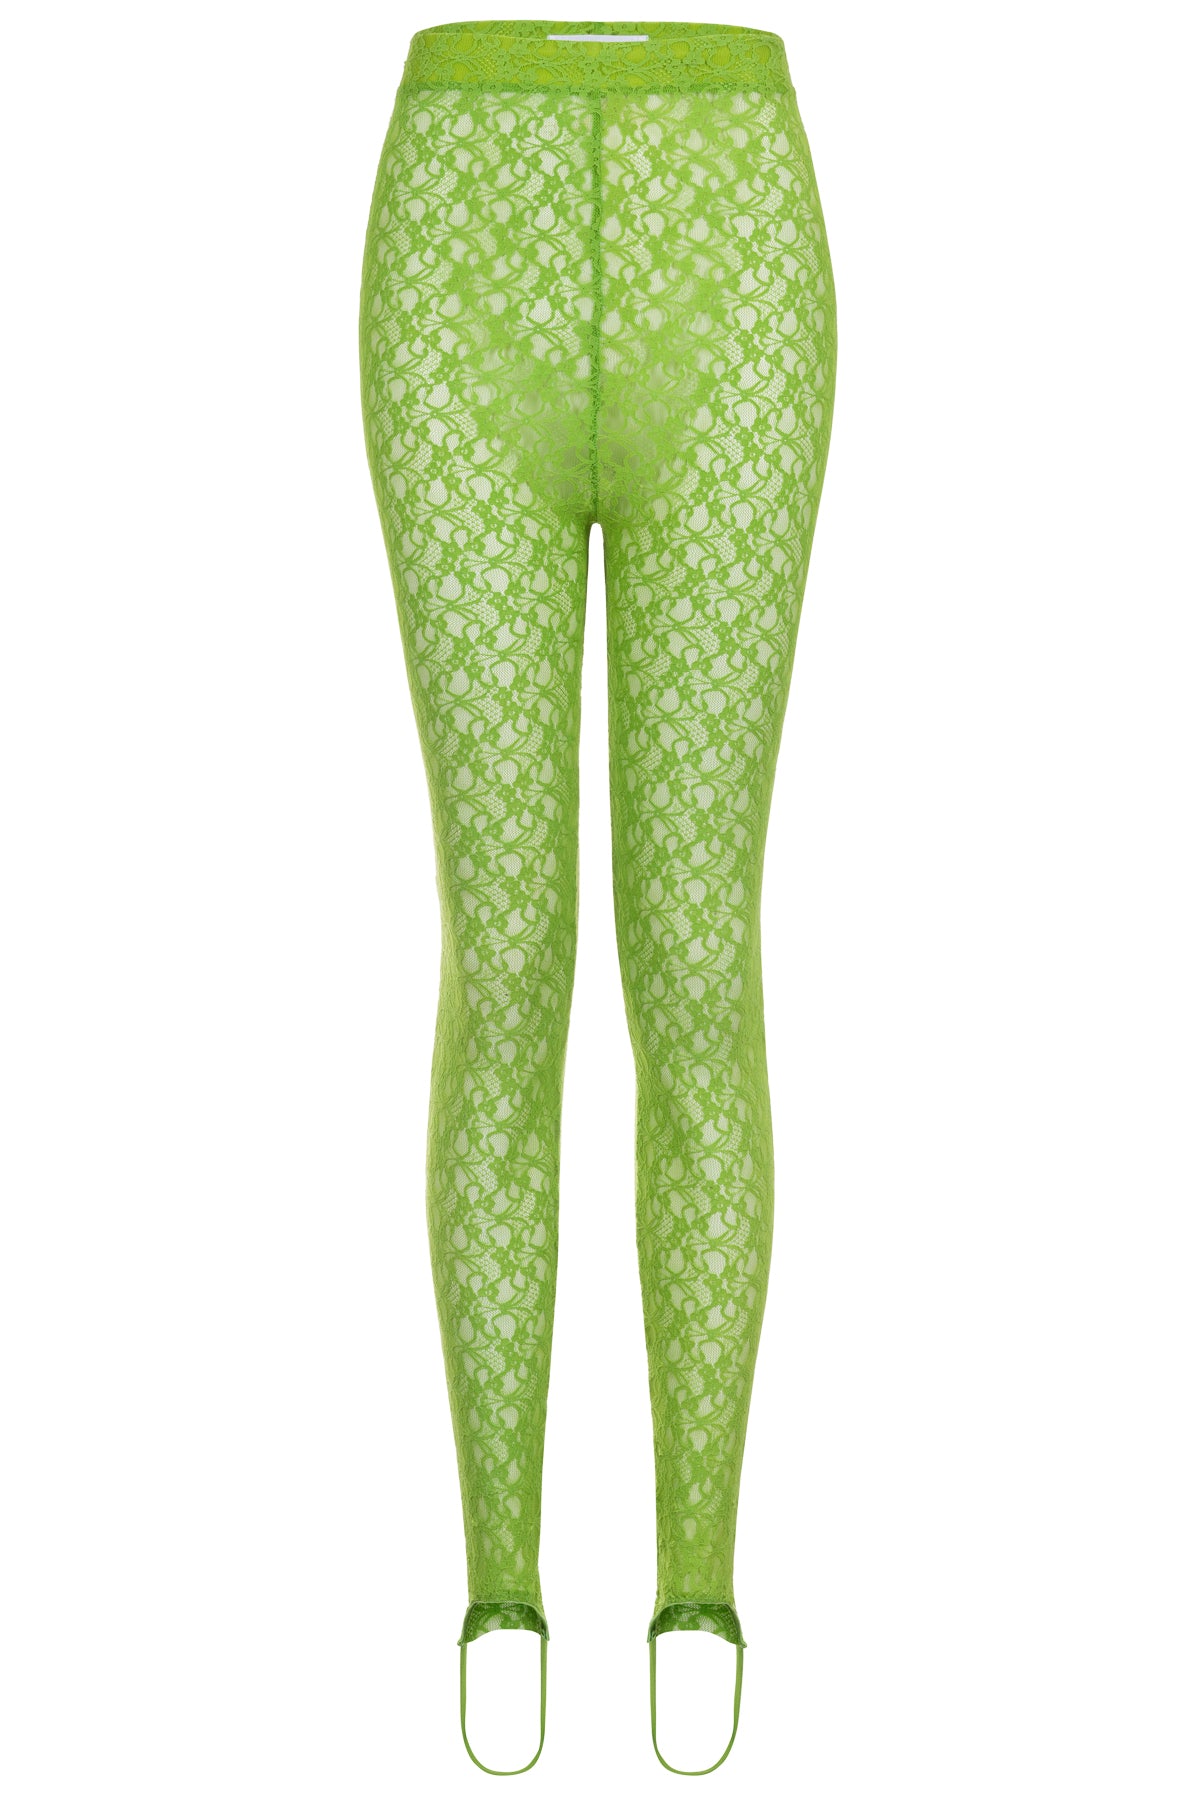 Sadie Lime Green Lace Stirrup Leggings- Made to Order – Natalie